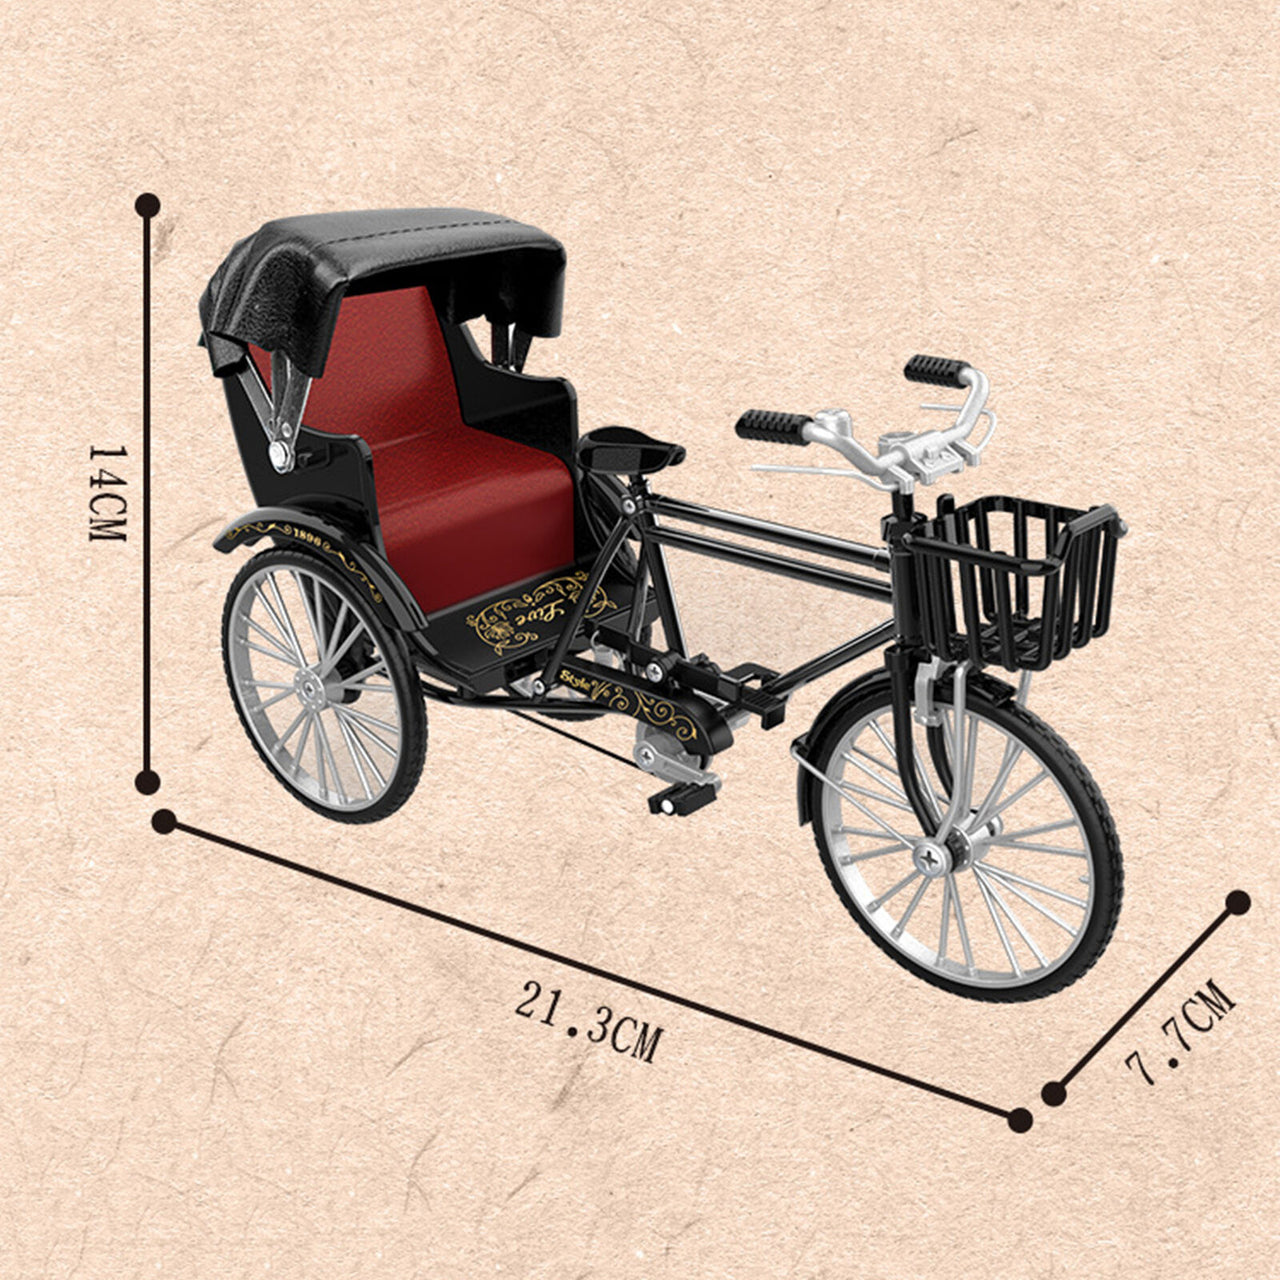 1:12 Scale Retro Nostalgic Style Tricycle Toy